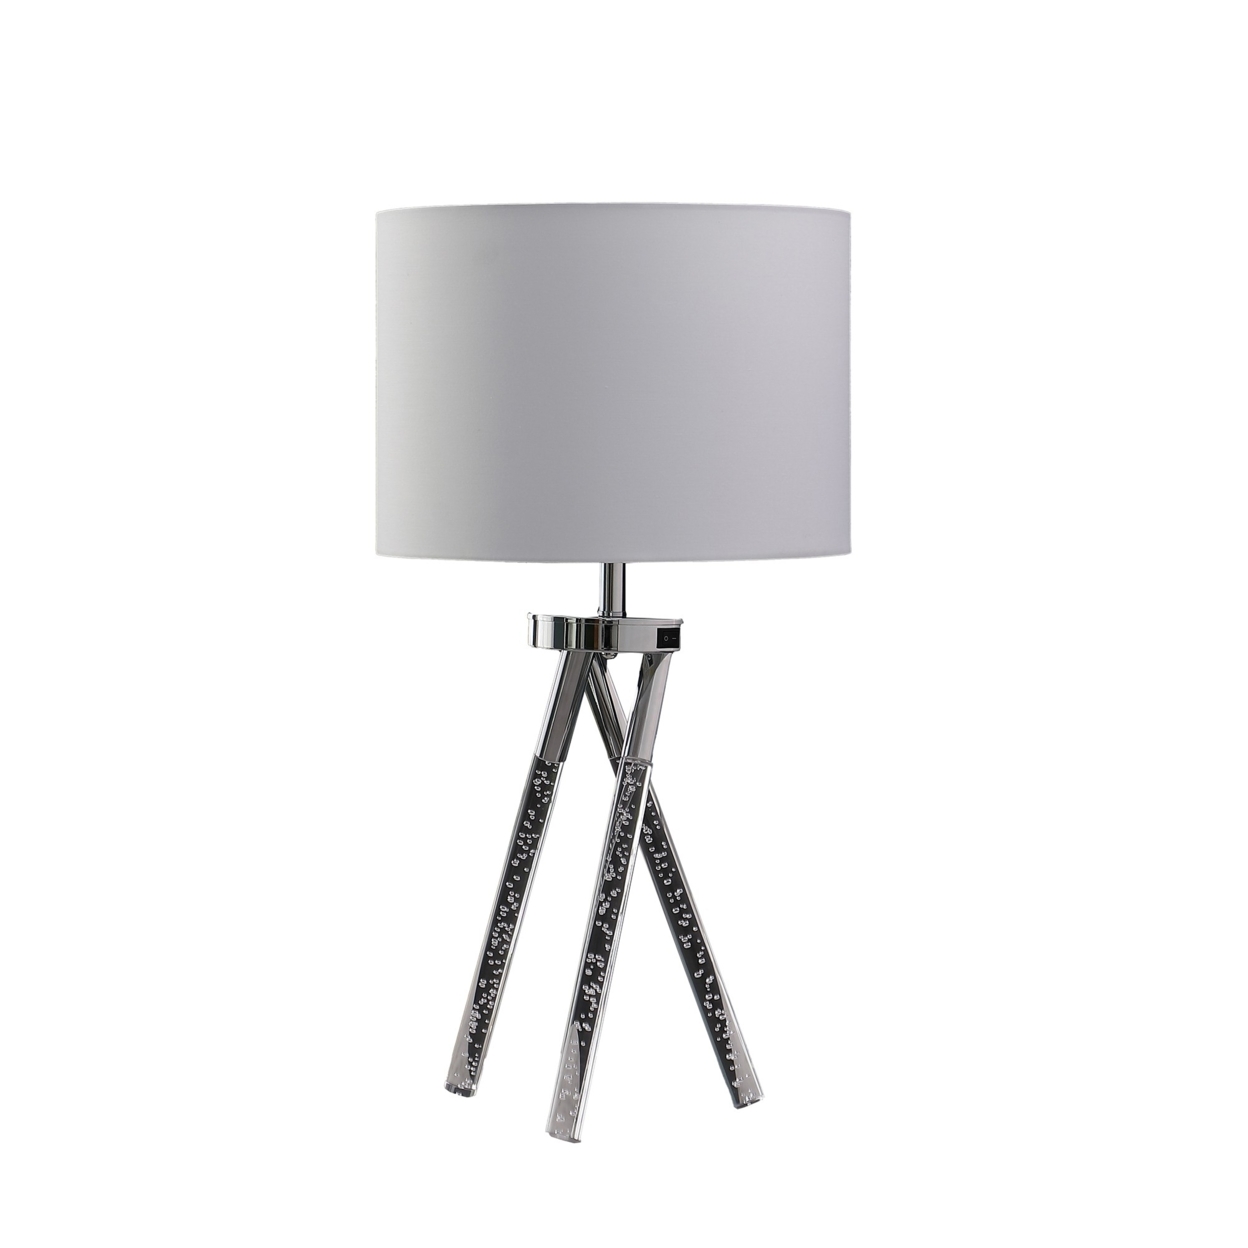 27 Inch Accent Table Lamp, Hardback Fabric Drum Shade, White, Silver Chrome- Saltoro Sherpi